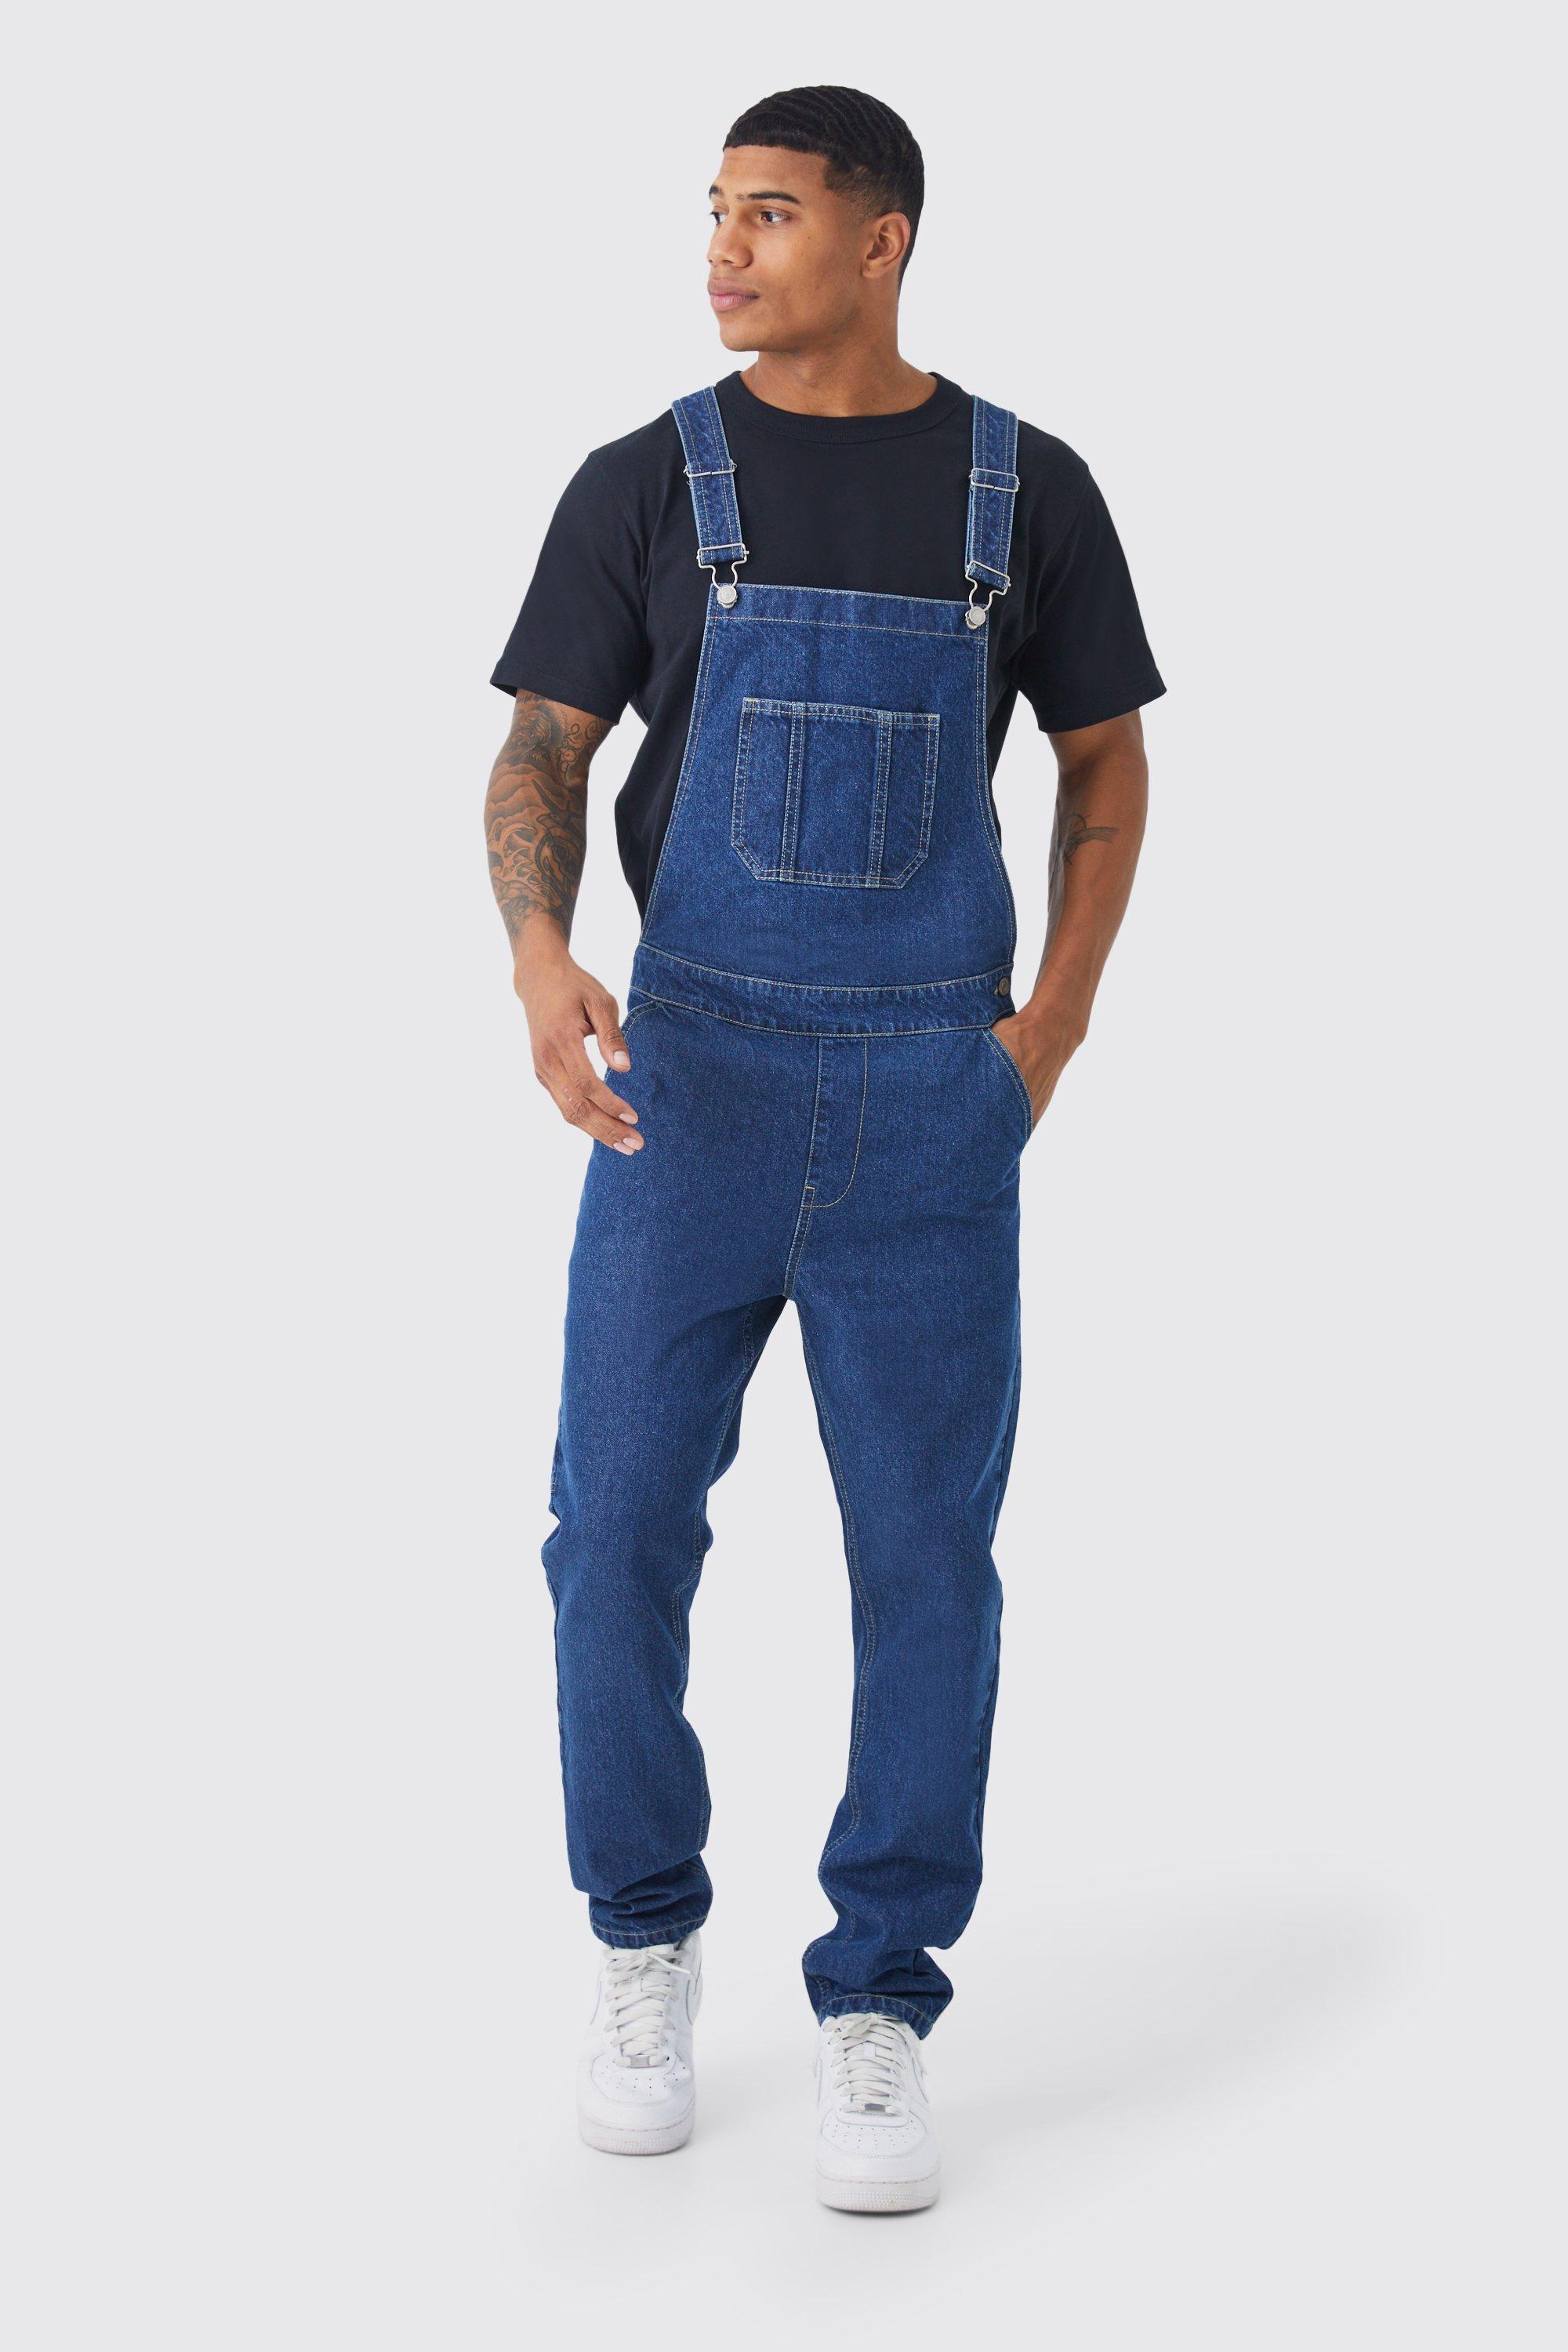 80s Mens Jeans, Pants, Parachute, Shorts, Tracksuits Mens Full Length Denim Dungarees - Blue - M $70.00 AT vintagedancer.com